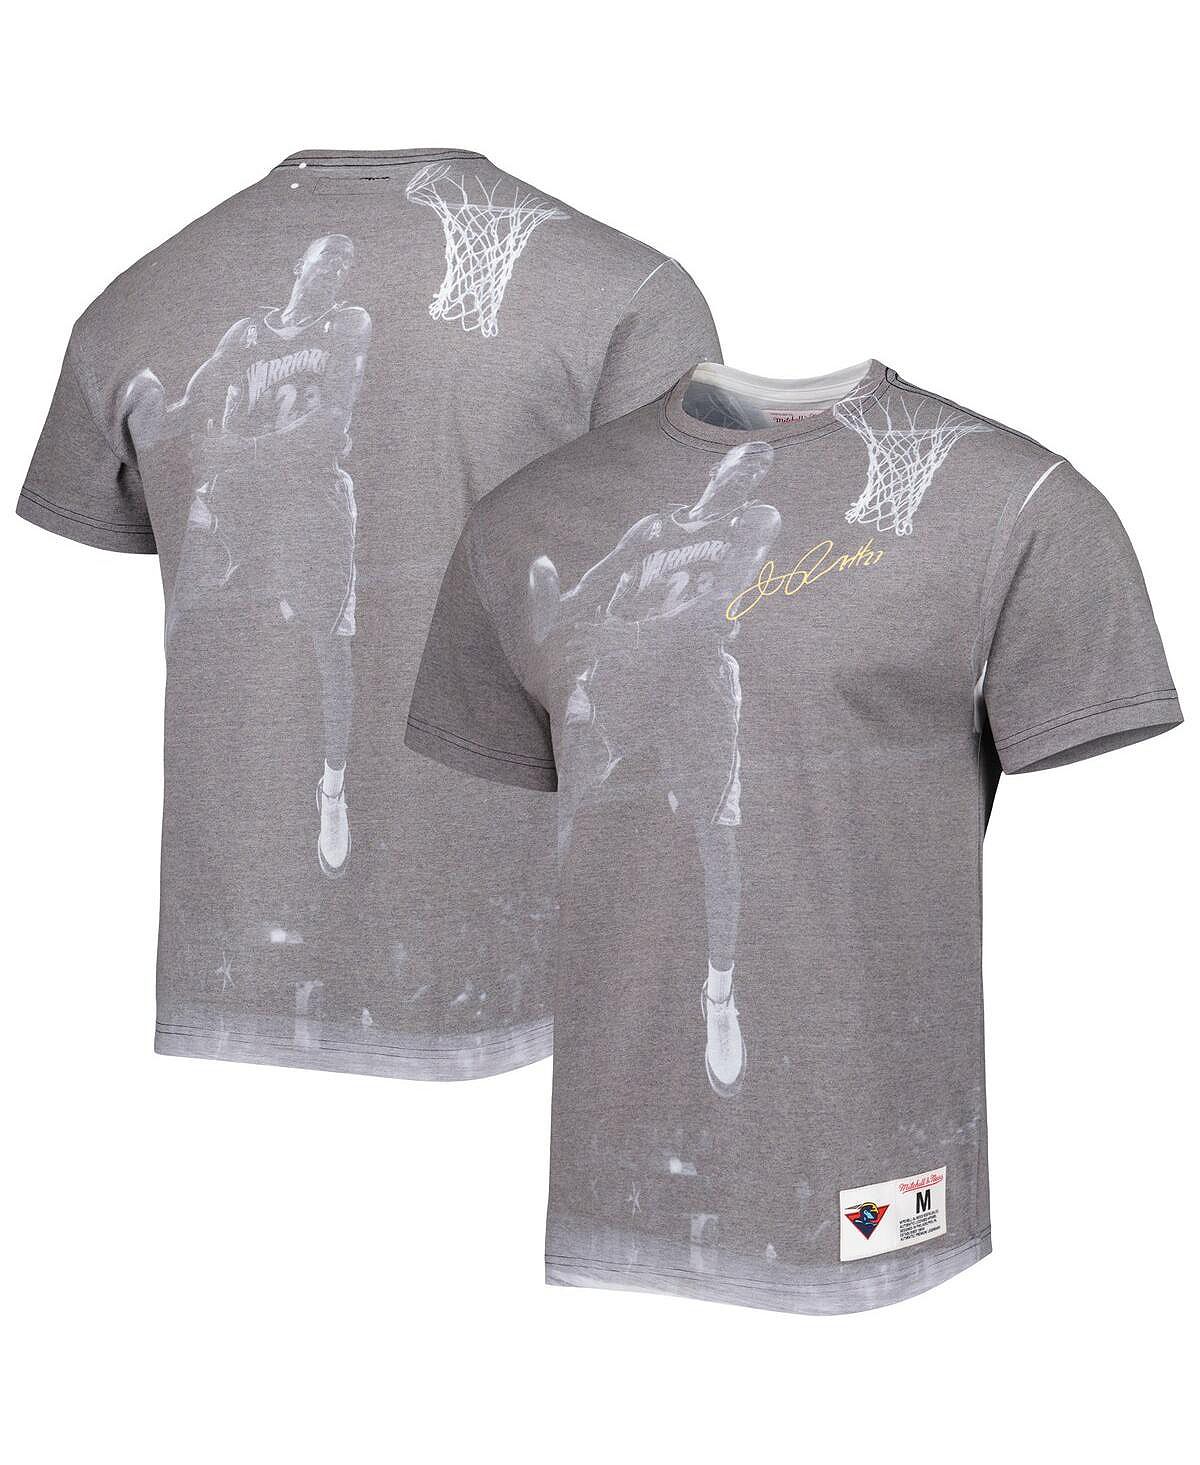 Мужская футболка jason richardson grey golden state warriors above the rim с сублимацией Mitchell & Ness, серый падуб городчатый голден джем